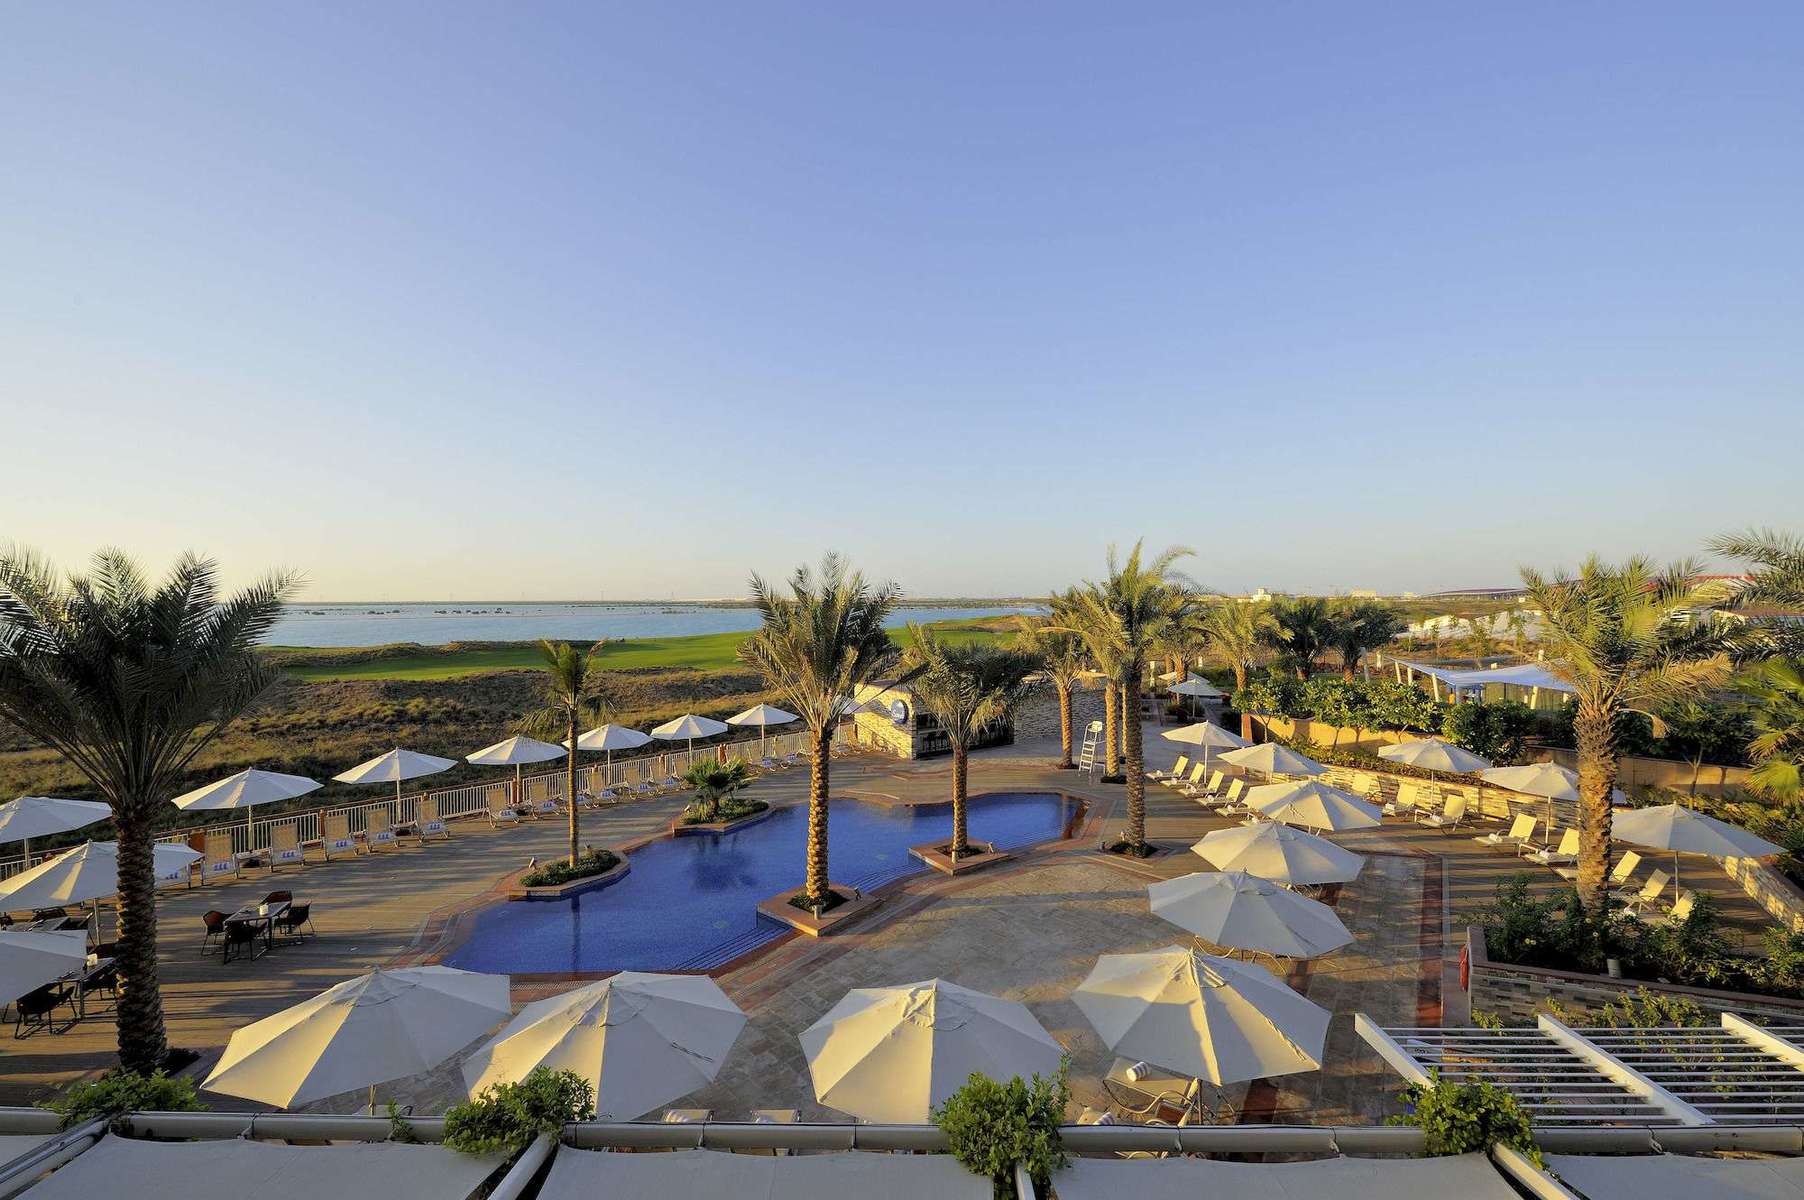 Park Inn by Radisson Abu Dhabi, Yas Island